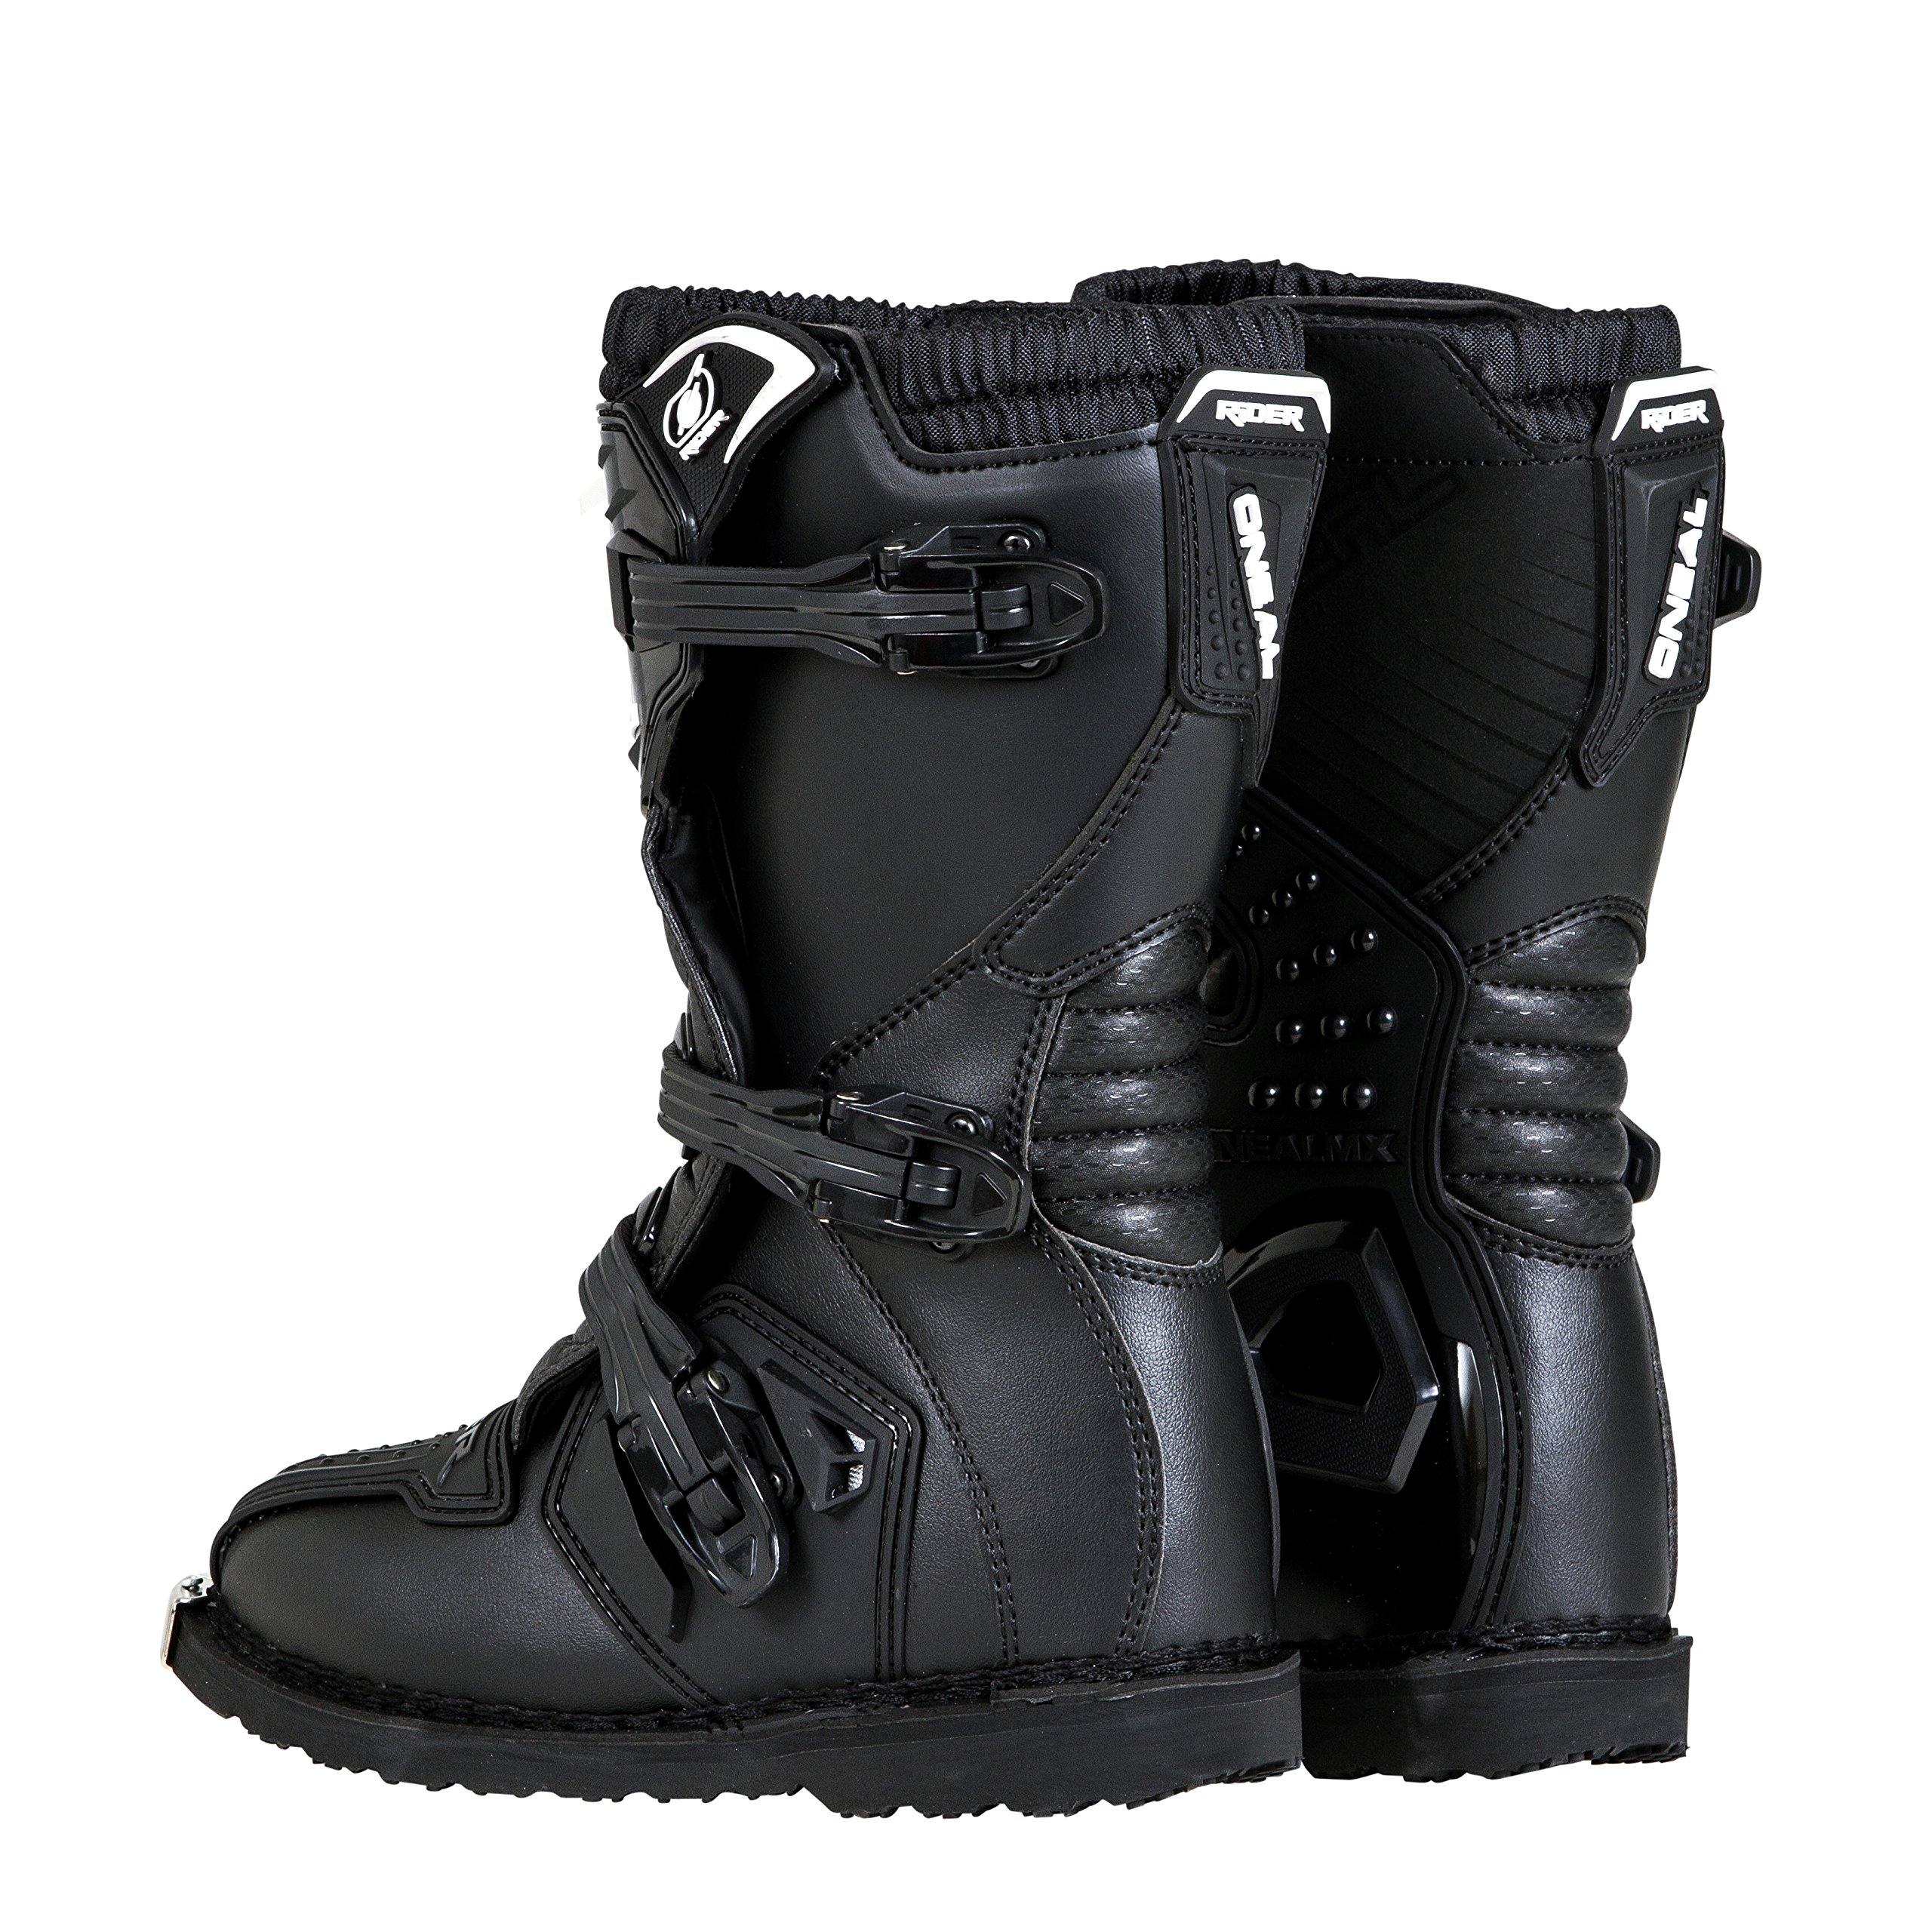 O'Neal Boys Rider Boot (Black, K1)